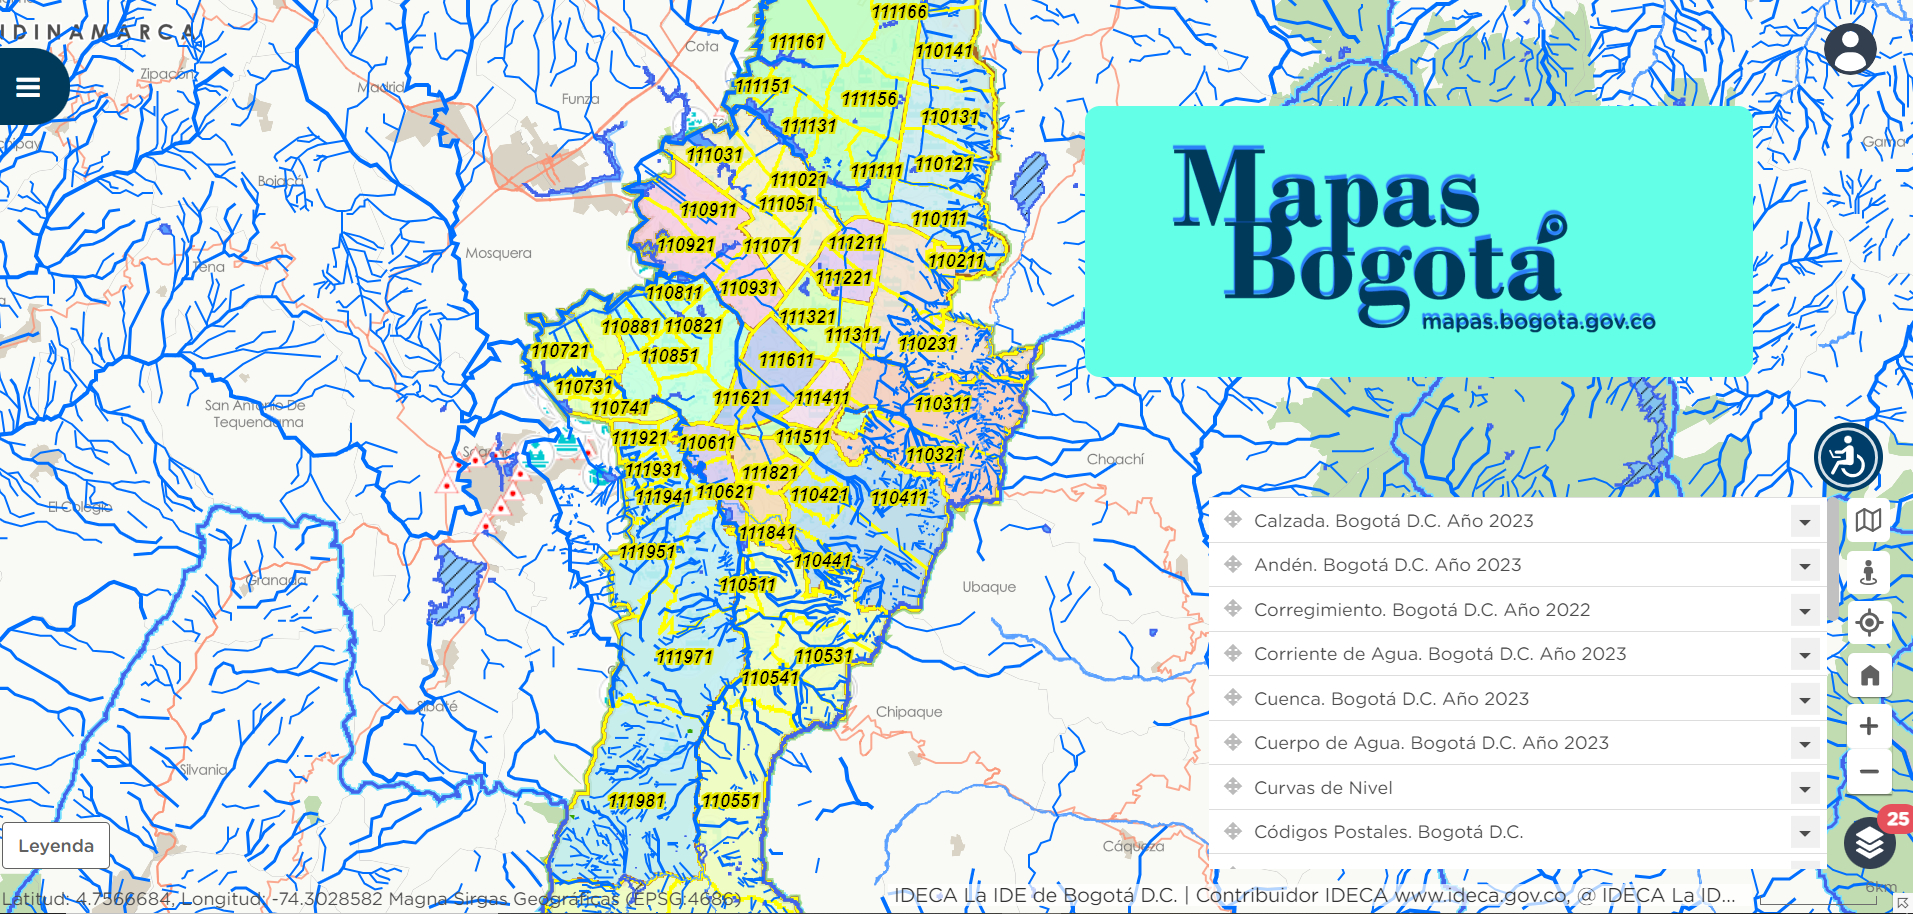 Mapa de Referencia de Bogotá 03.23 